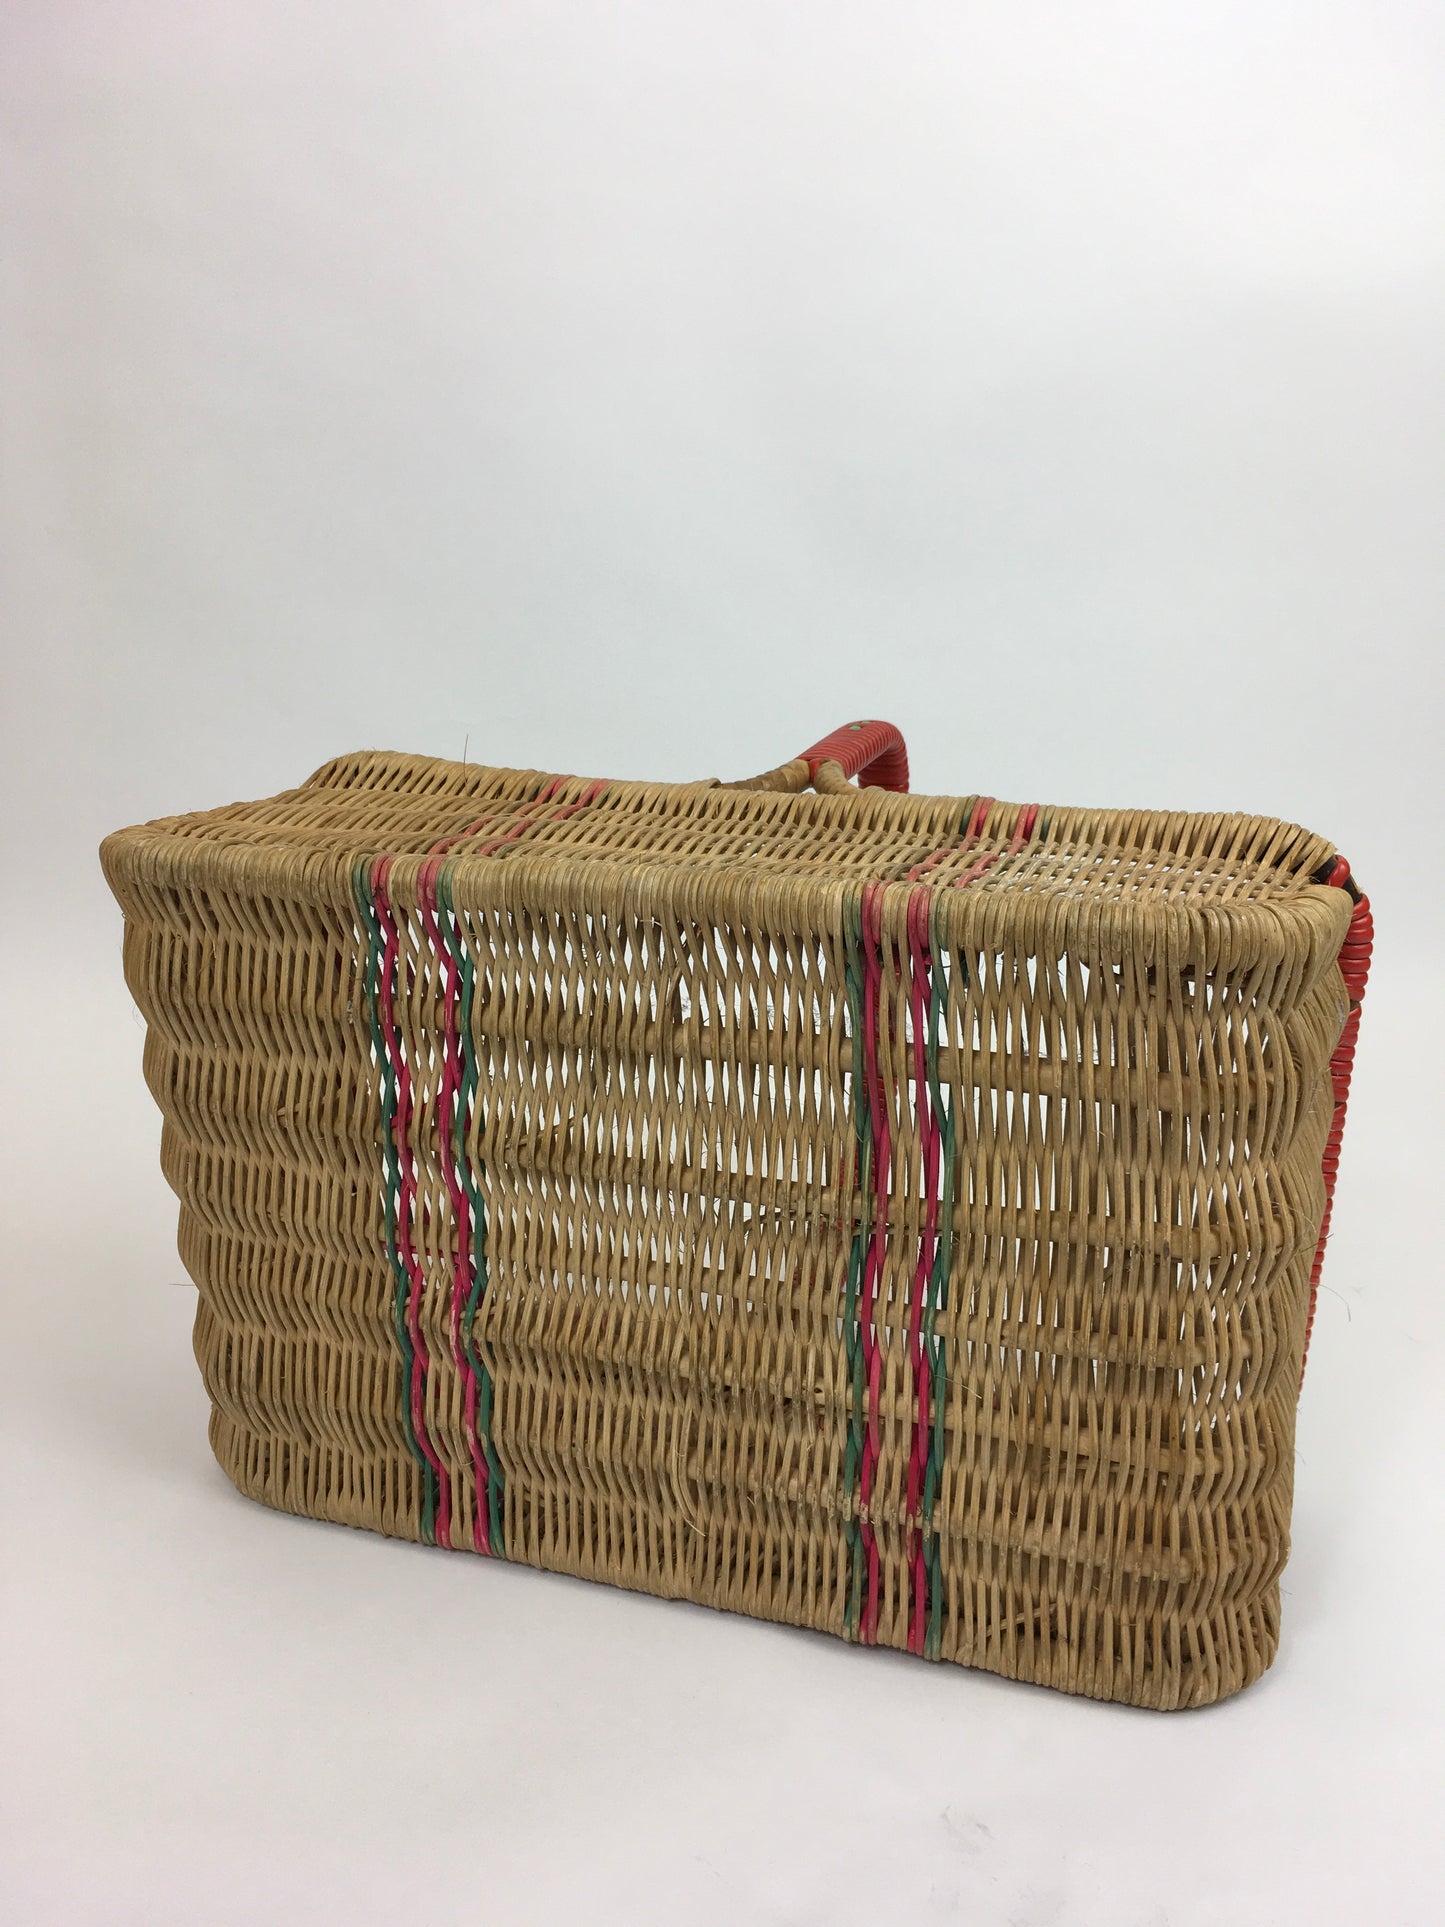 Original 1940’s Wicker Basket - In Naturals, Reds and Greens